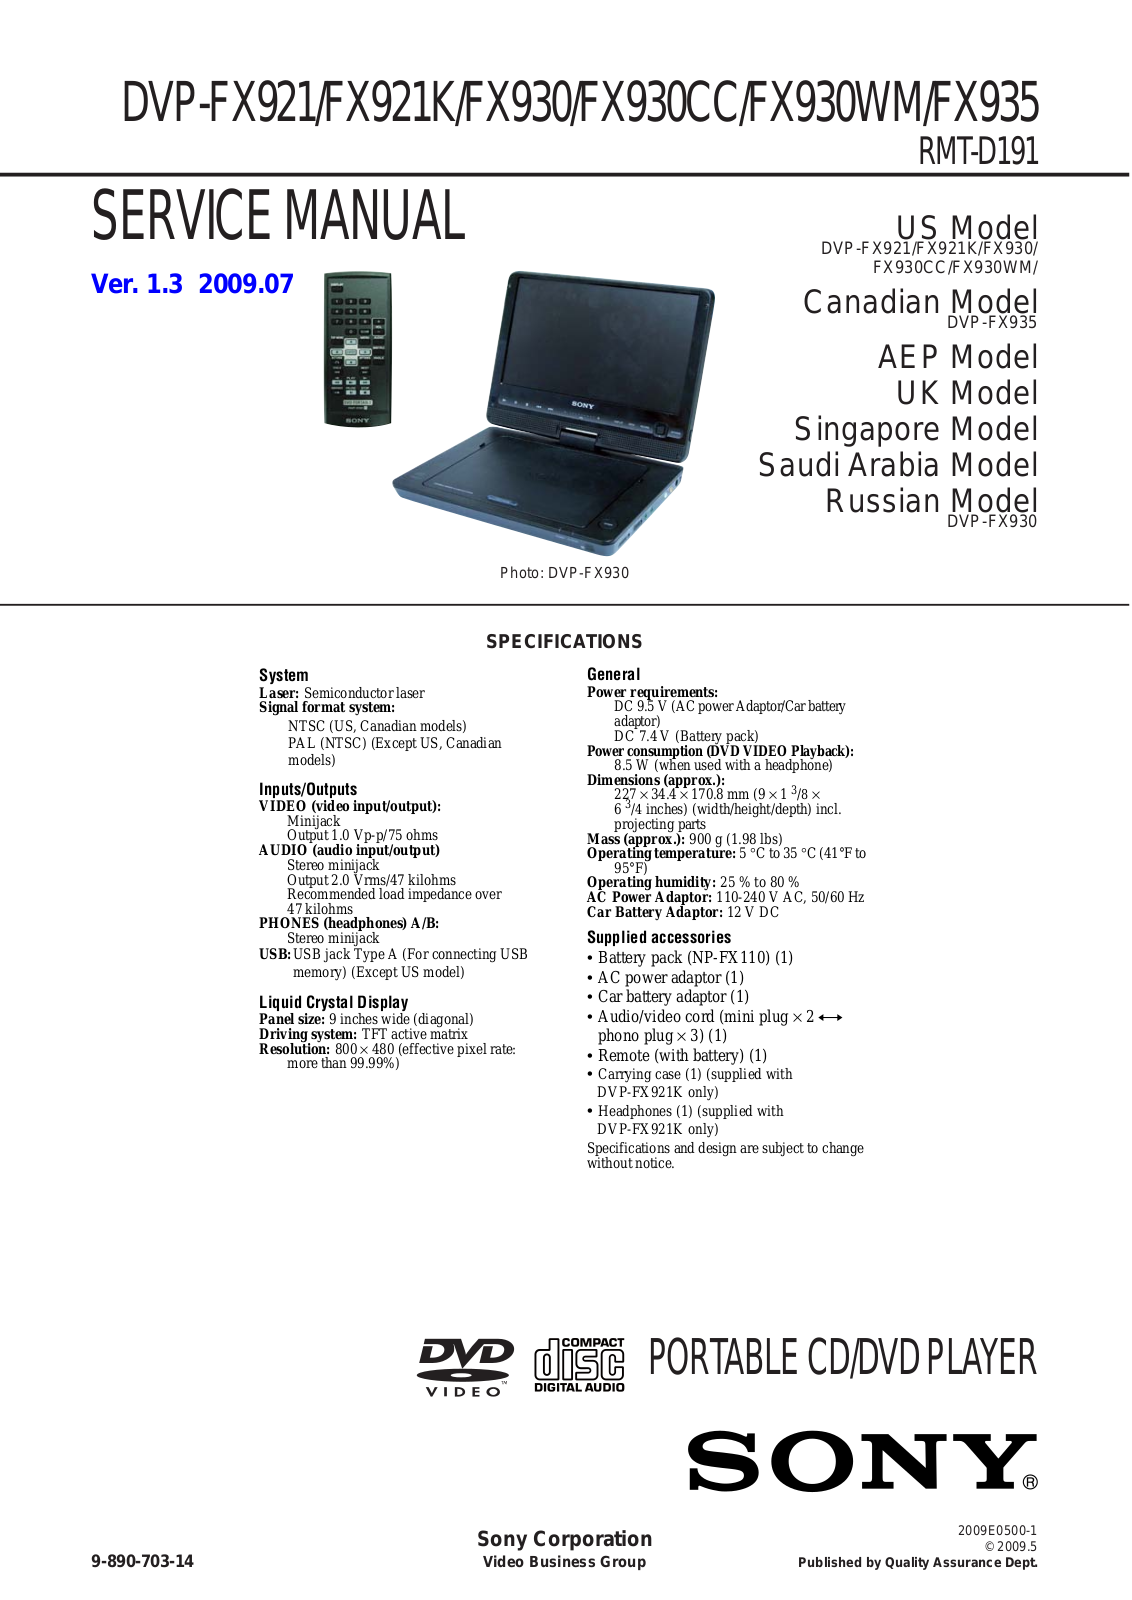 Sony DVPFX-921, DVPFX-930, DVPFX-921-K, DVPFX-930-CC, DVPFX-930-WM Service manual